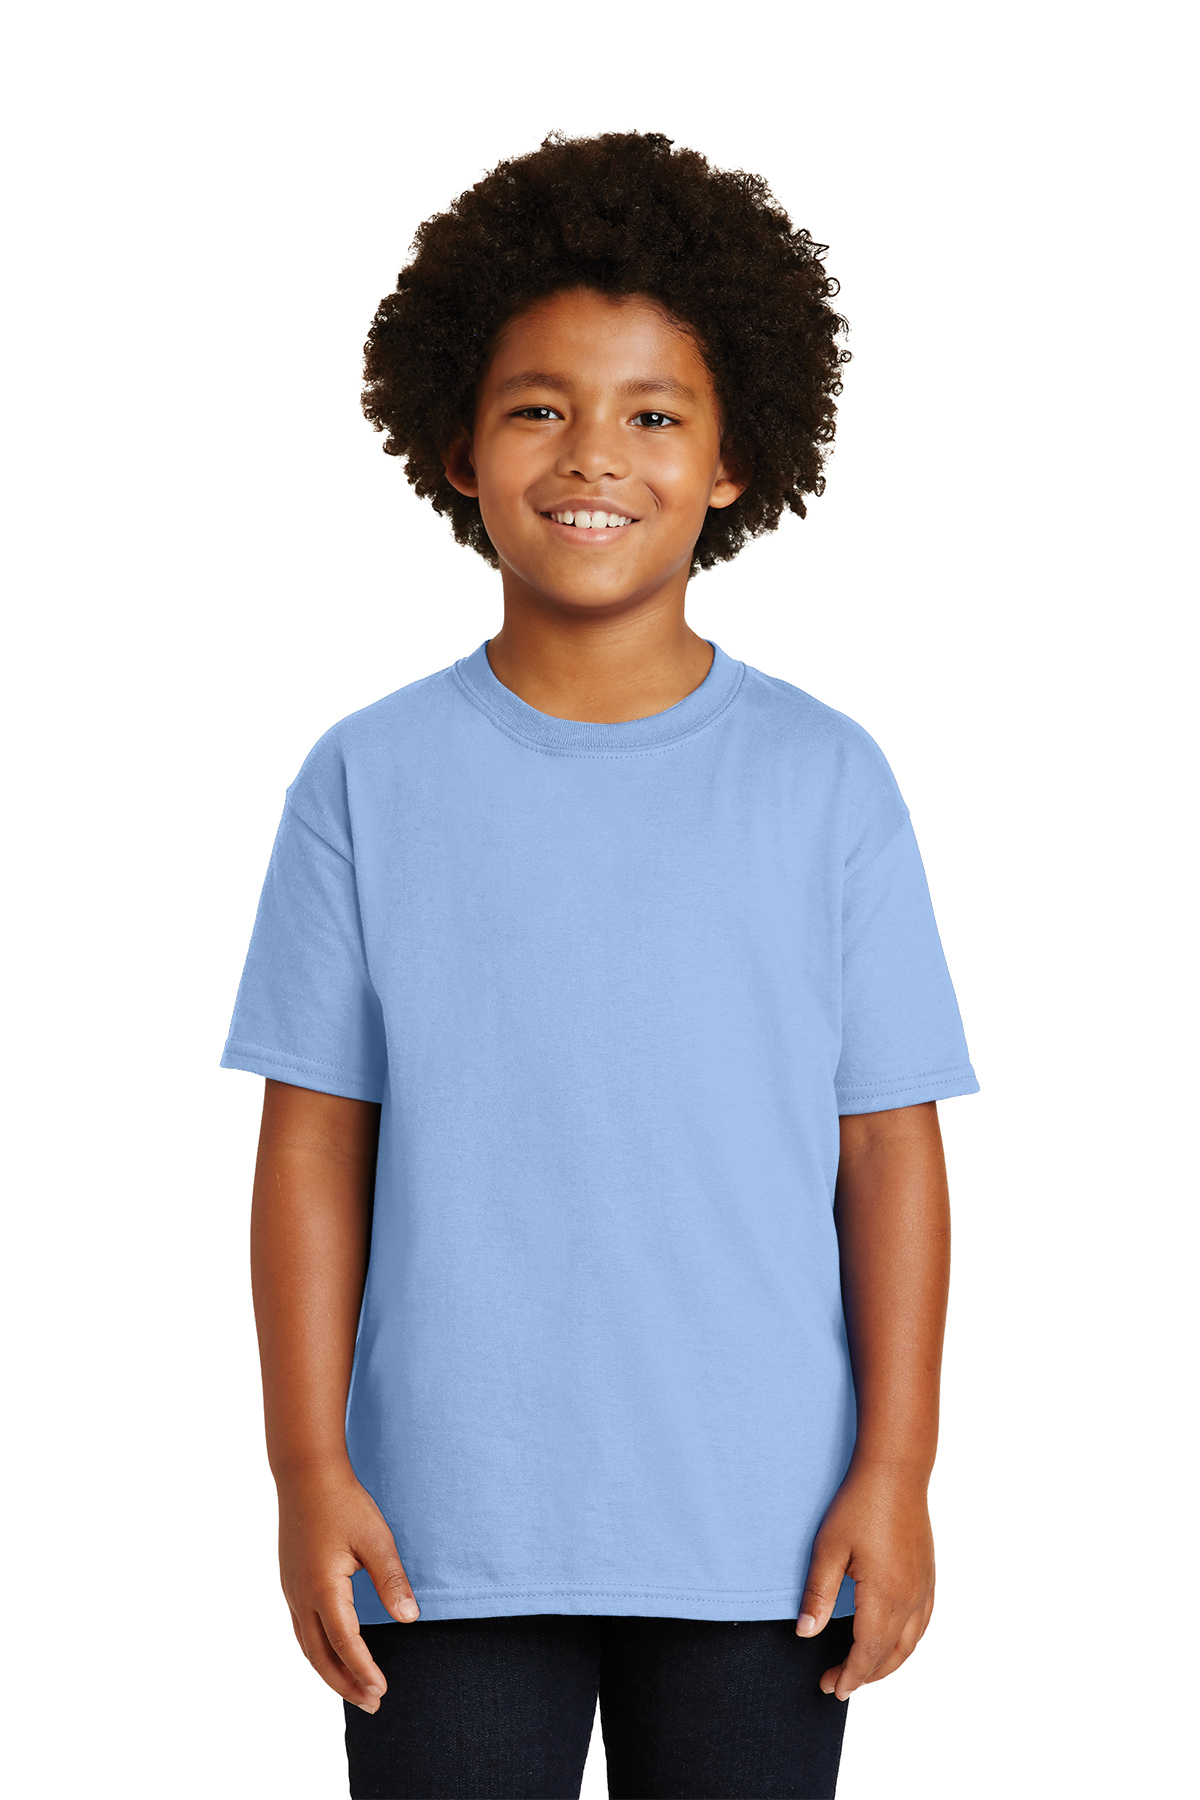 Cotton | Ultra Youth Cotton SanMar Product T-Shirt 100% Gildan | US